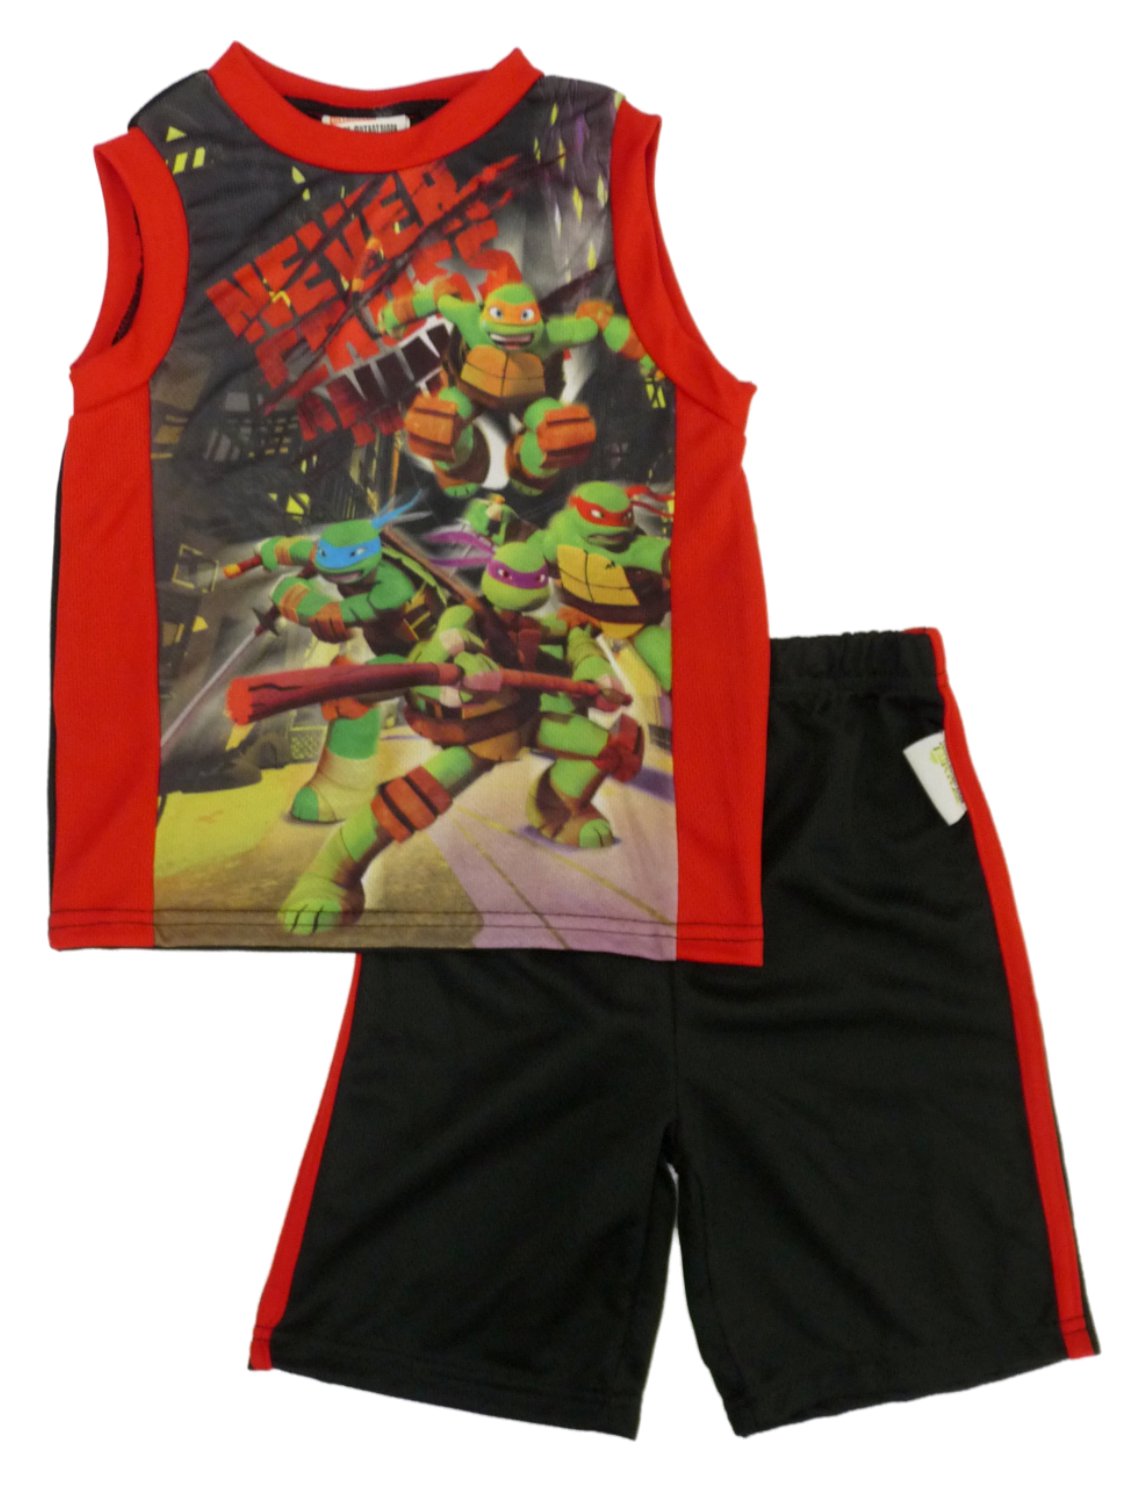 Nickelodeon Teenage Mutant Ninja Turtles Boys 2-Piece Athletic Tank Top & Shorts Set